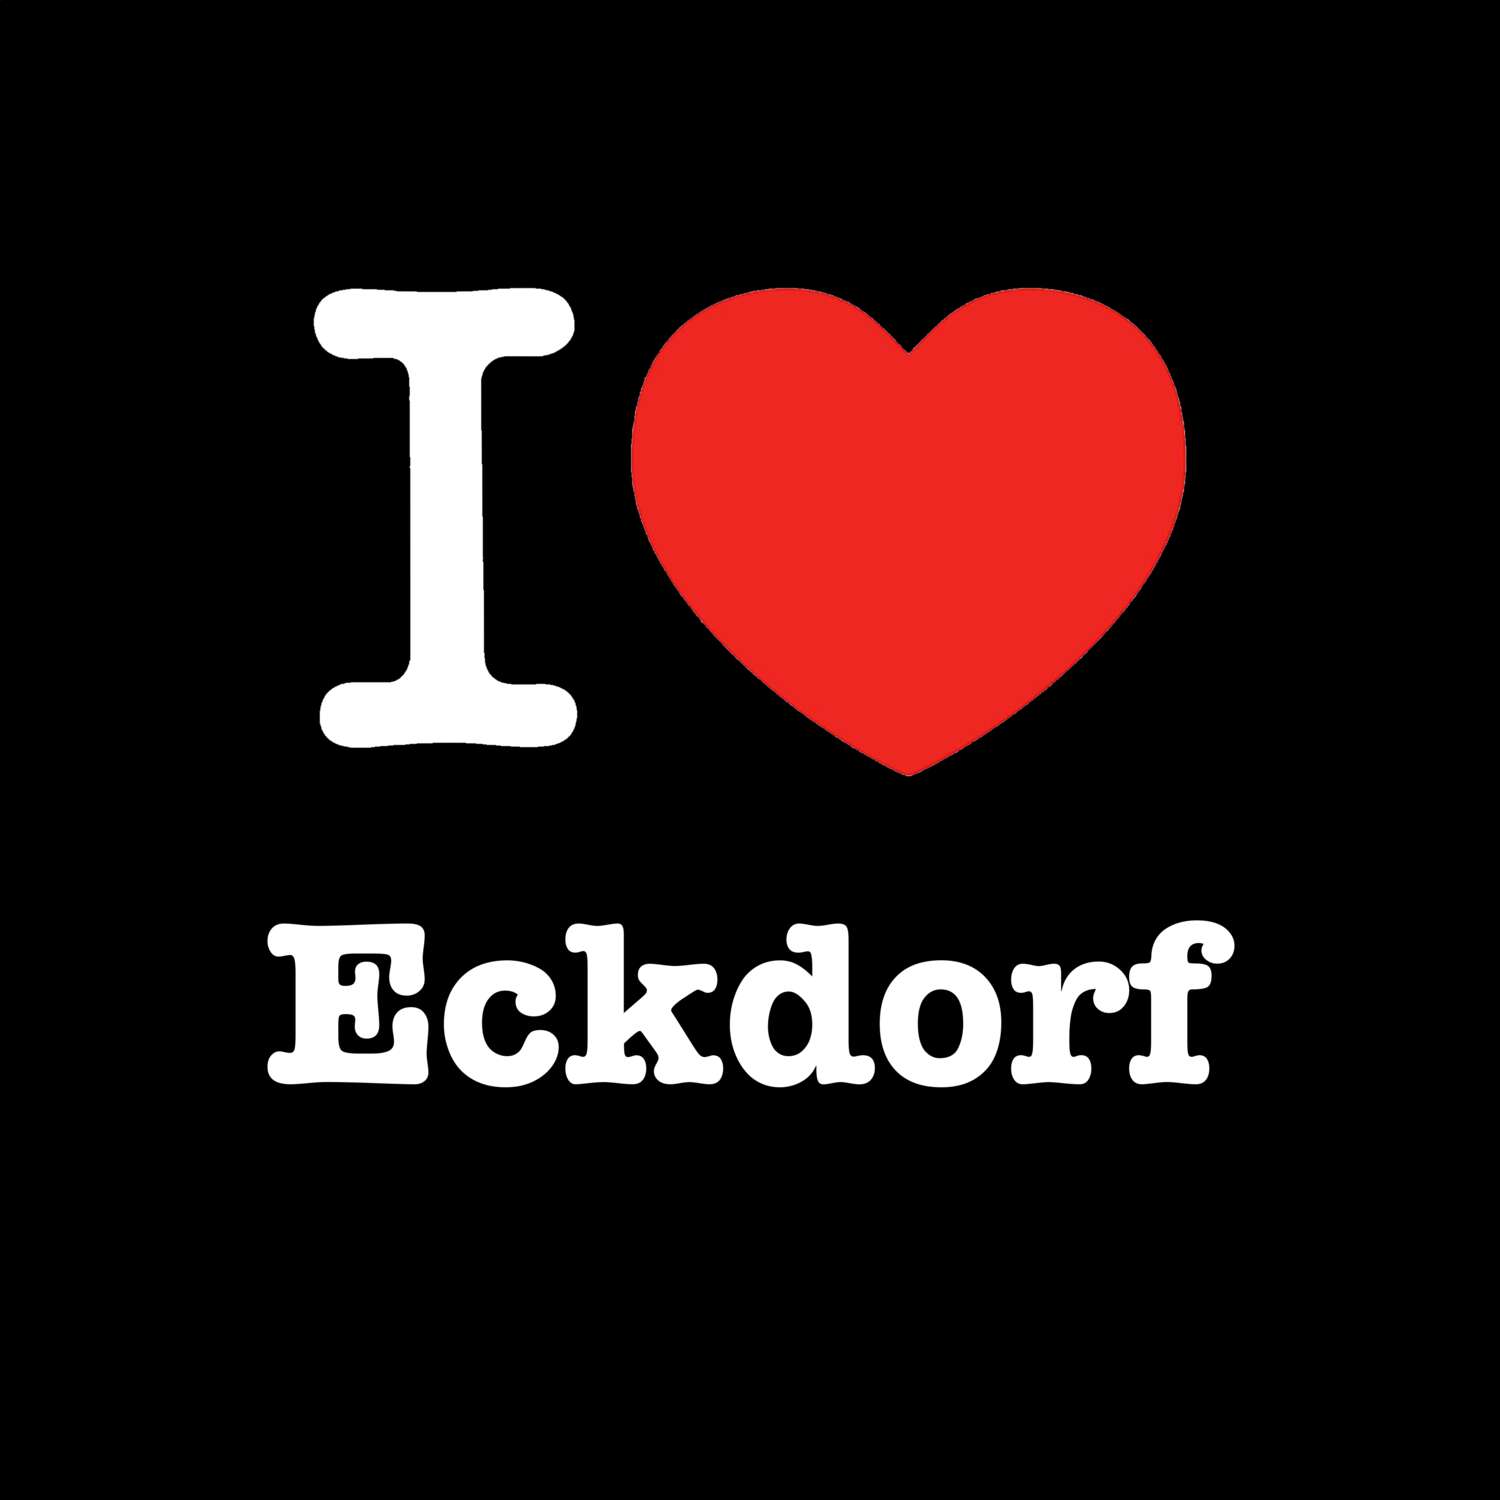 Eckdorf T-Shirt »I love«